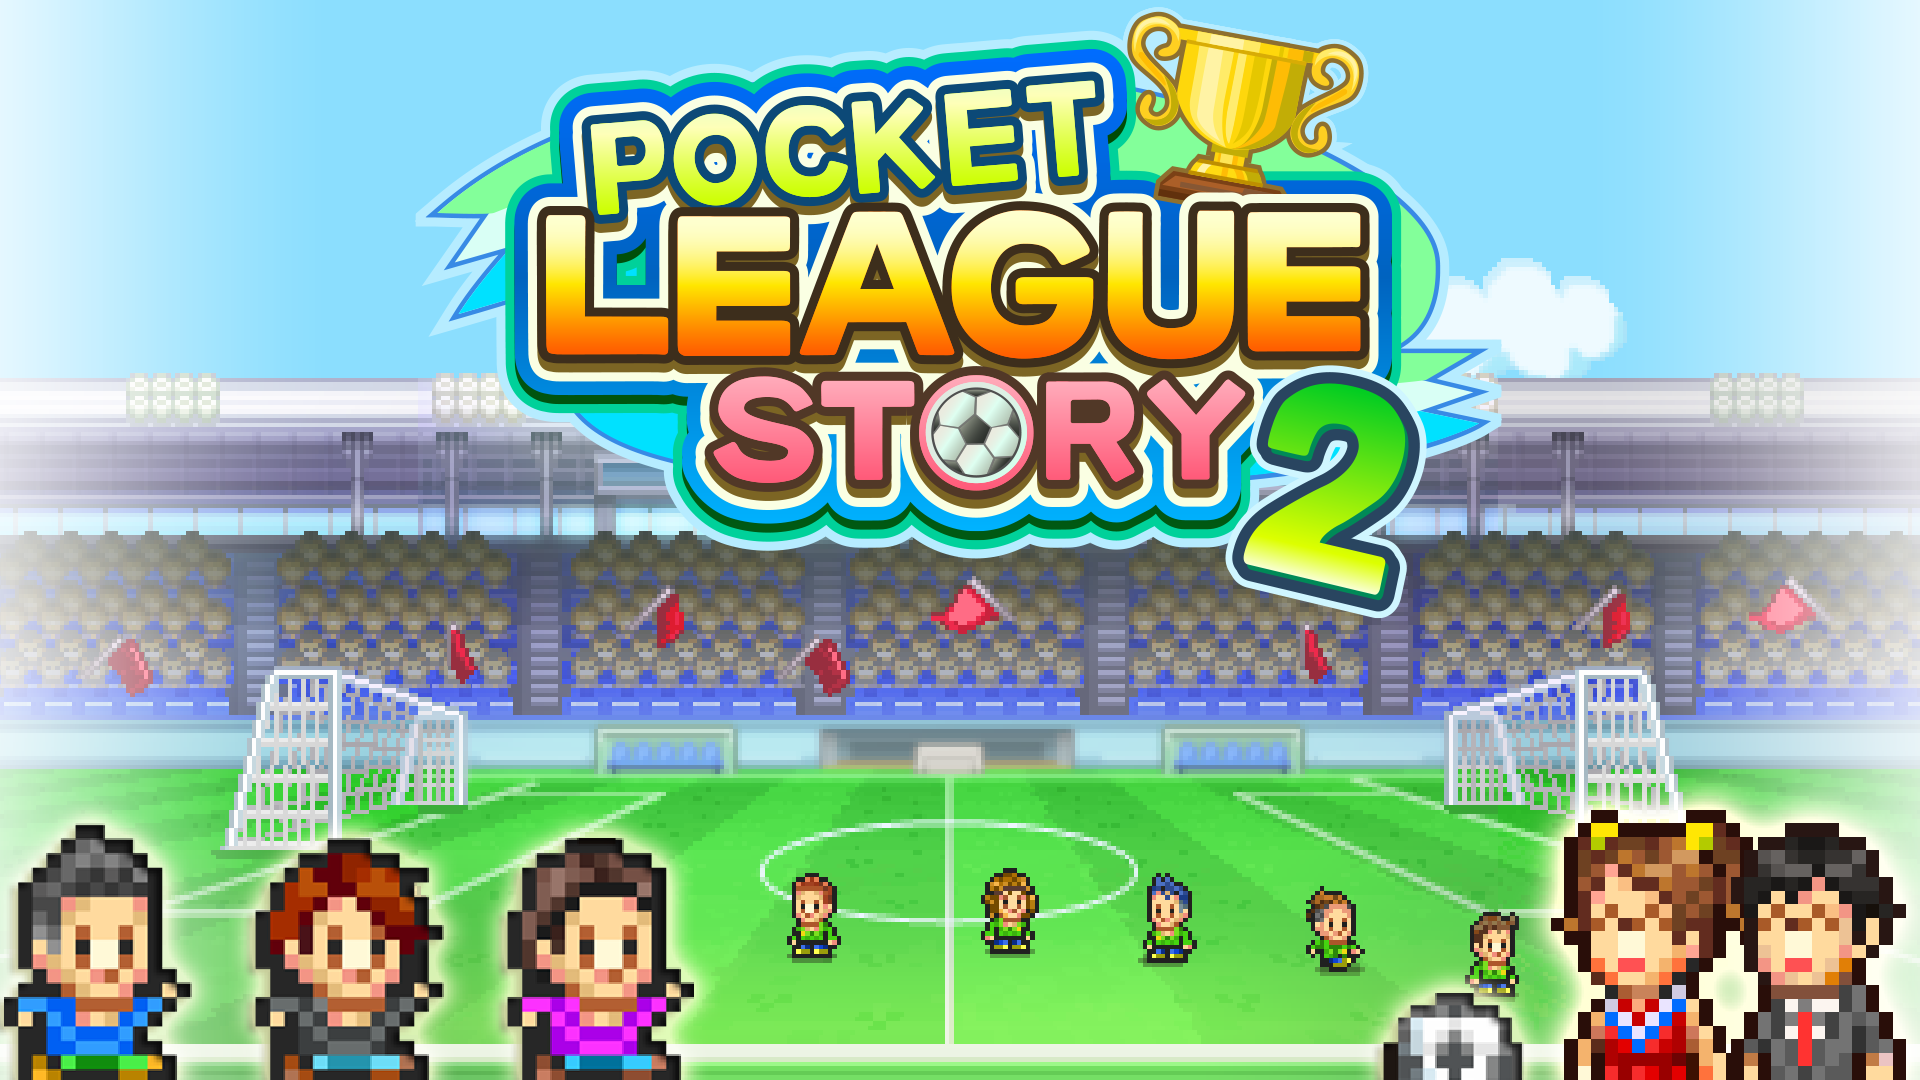 Pocket League Story 2 v2.1.9 MOD APK (Unlimited Money)